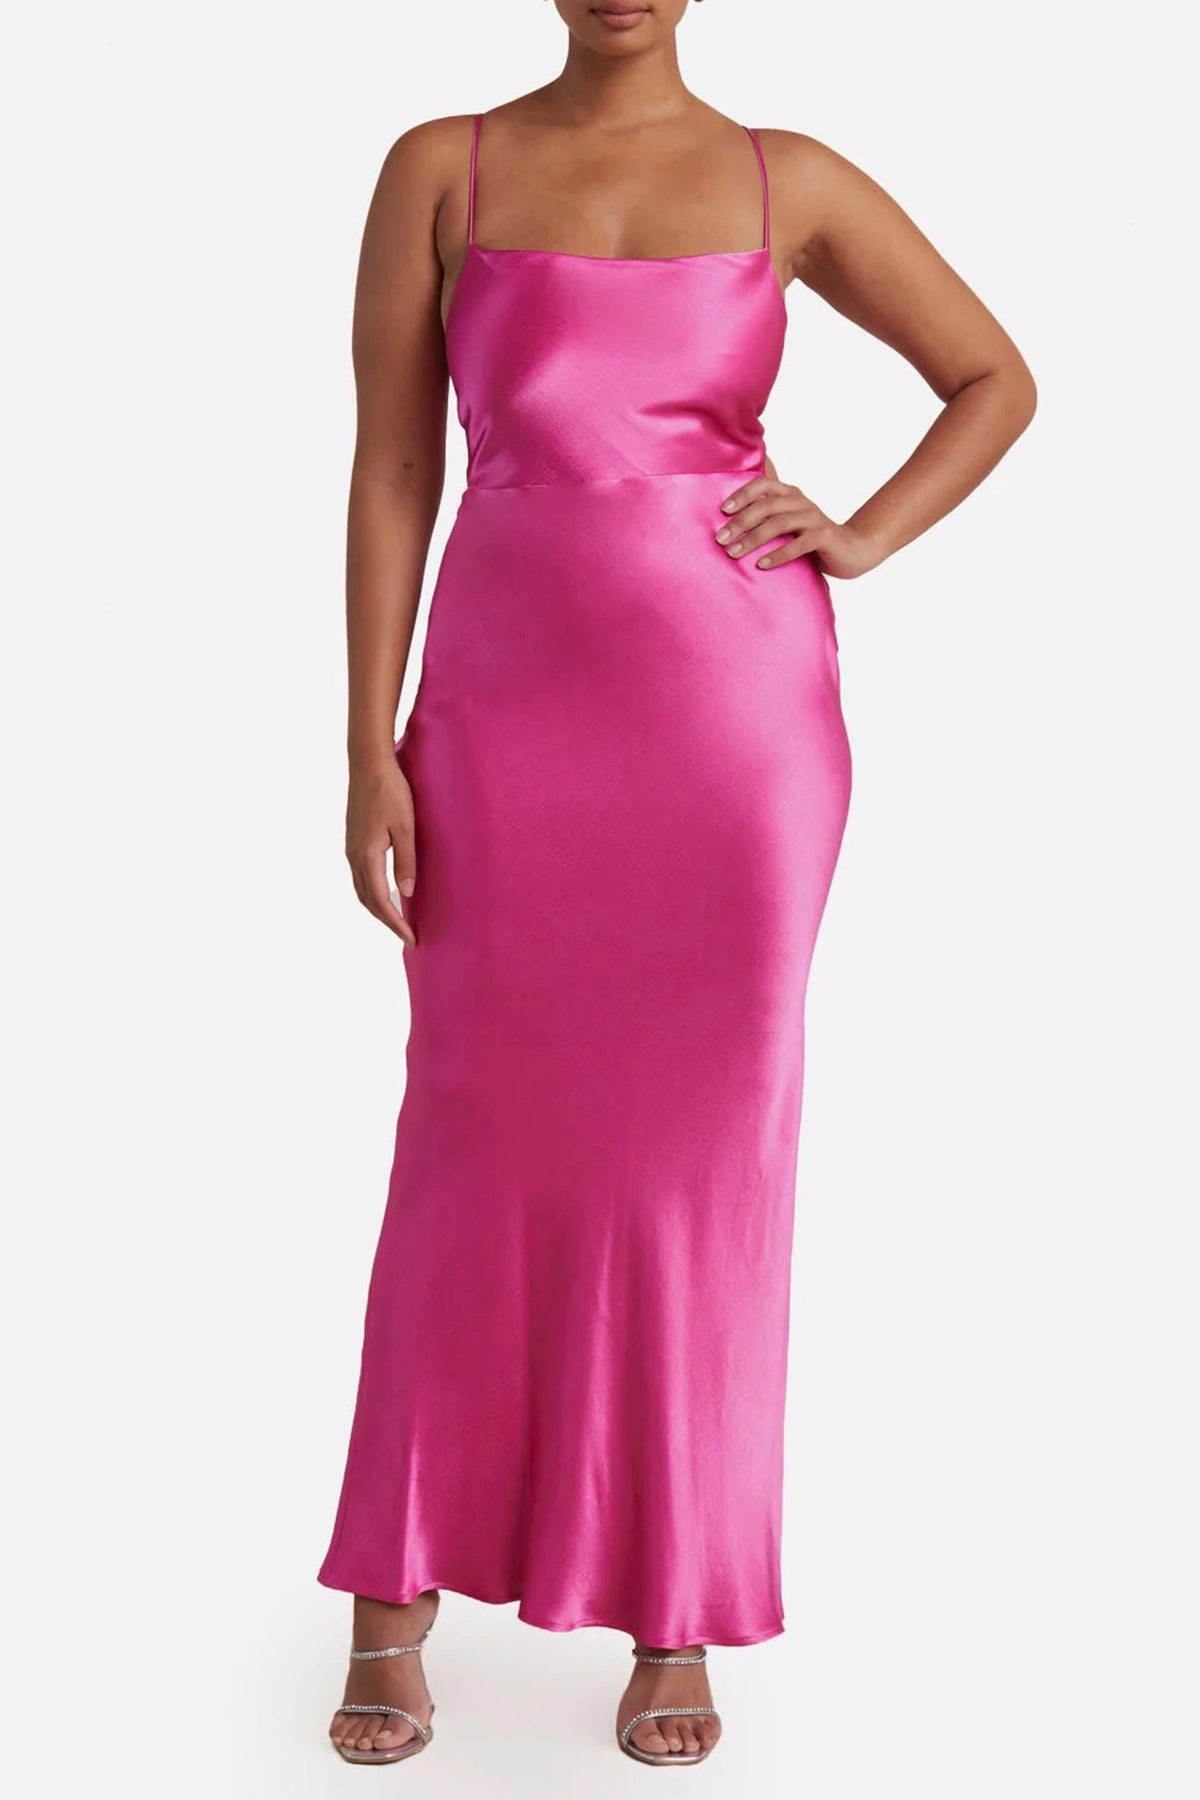 Bec & Bridge - Loren Maxi in Deep Pink | All The Dresses